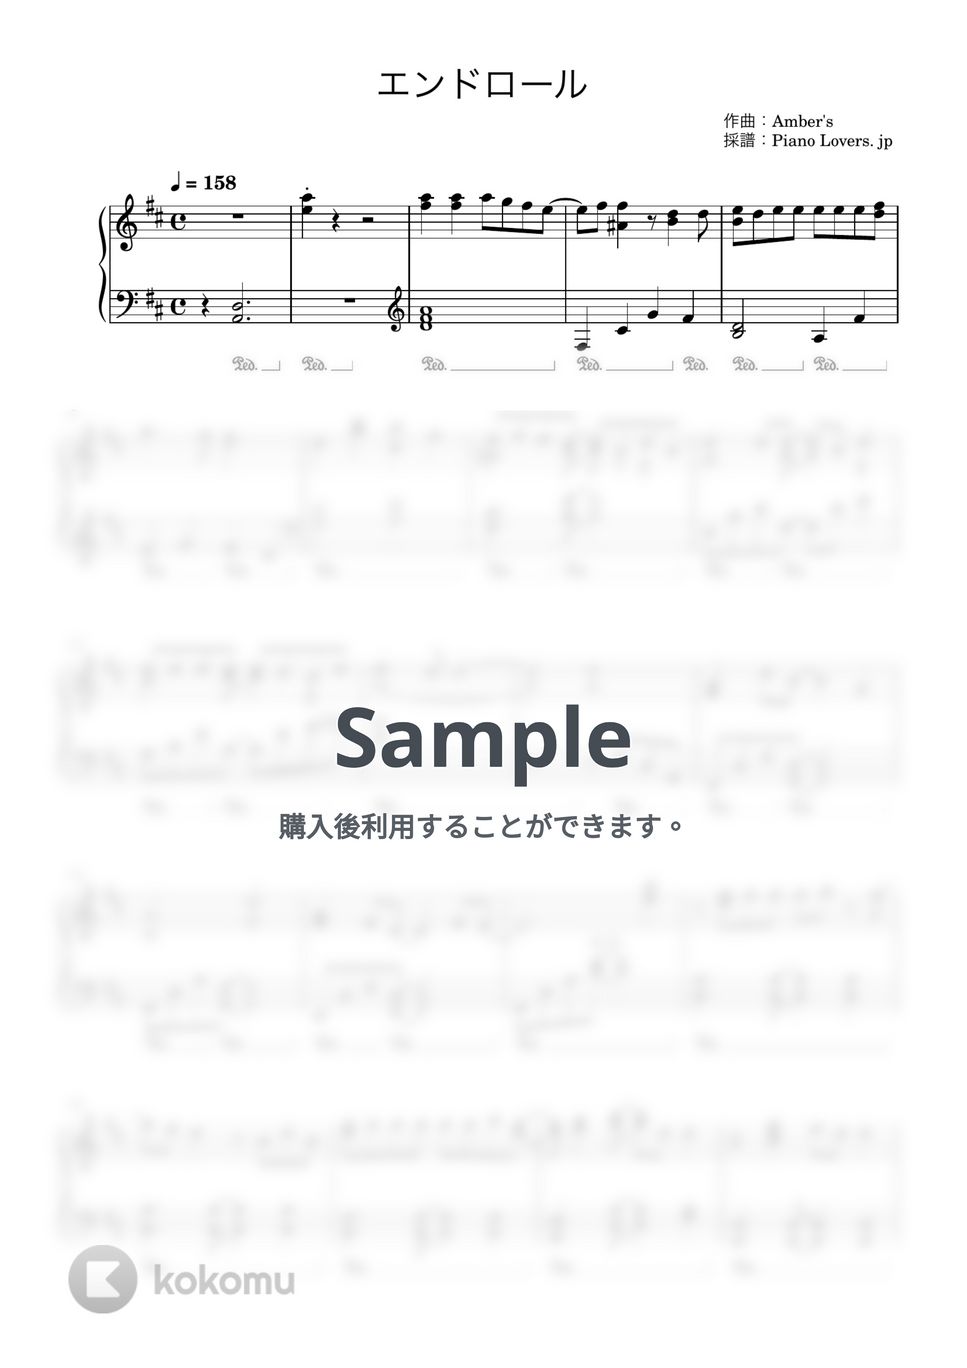 Amber's - エンドロール (彼女、お借りします / ピアノ楽譜 / 初級) by Piano Lovers. jp